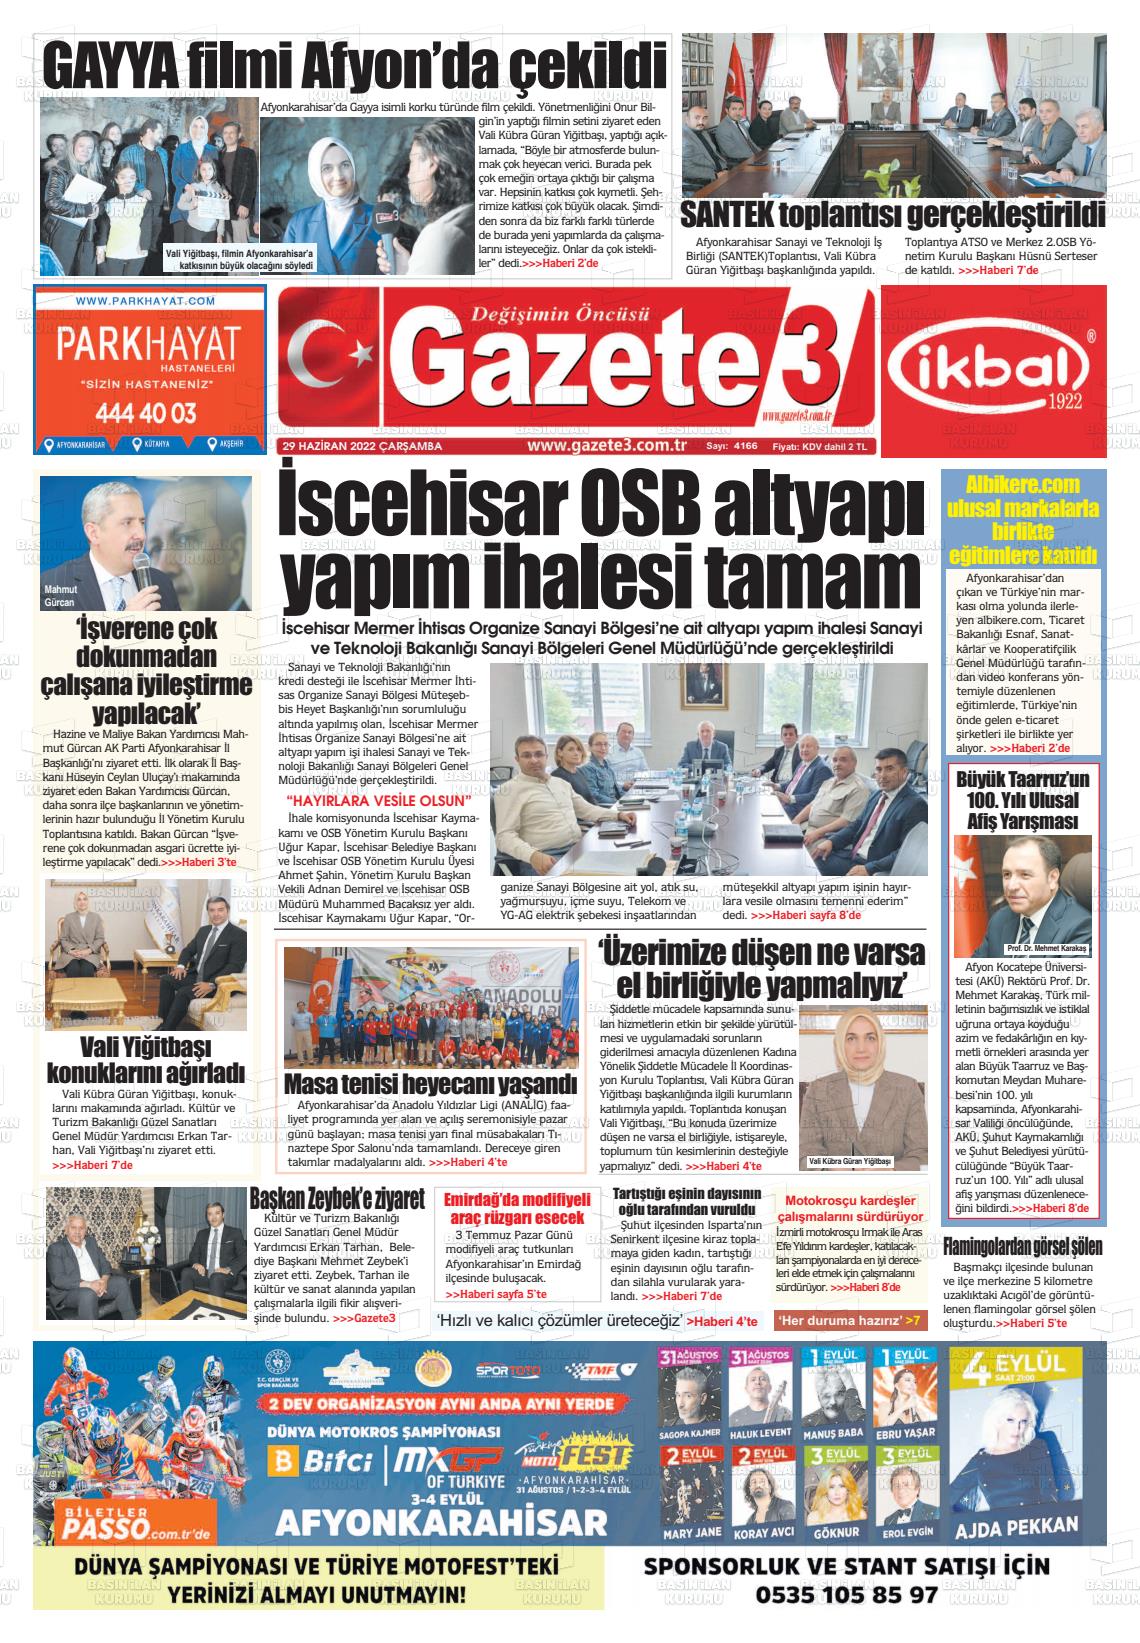 29 Haziran 2022 Gazete 3 Gazete Manşeti